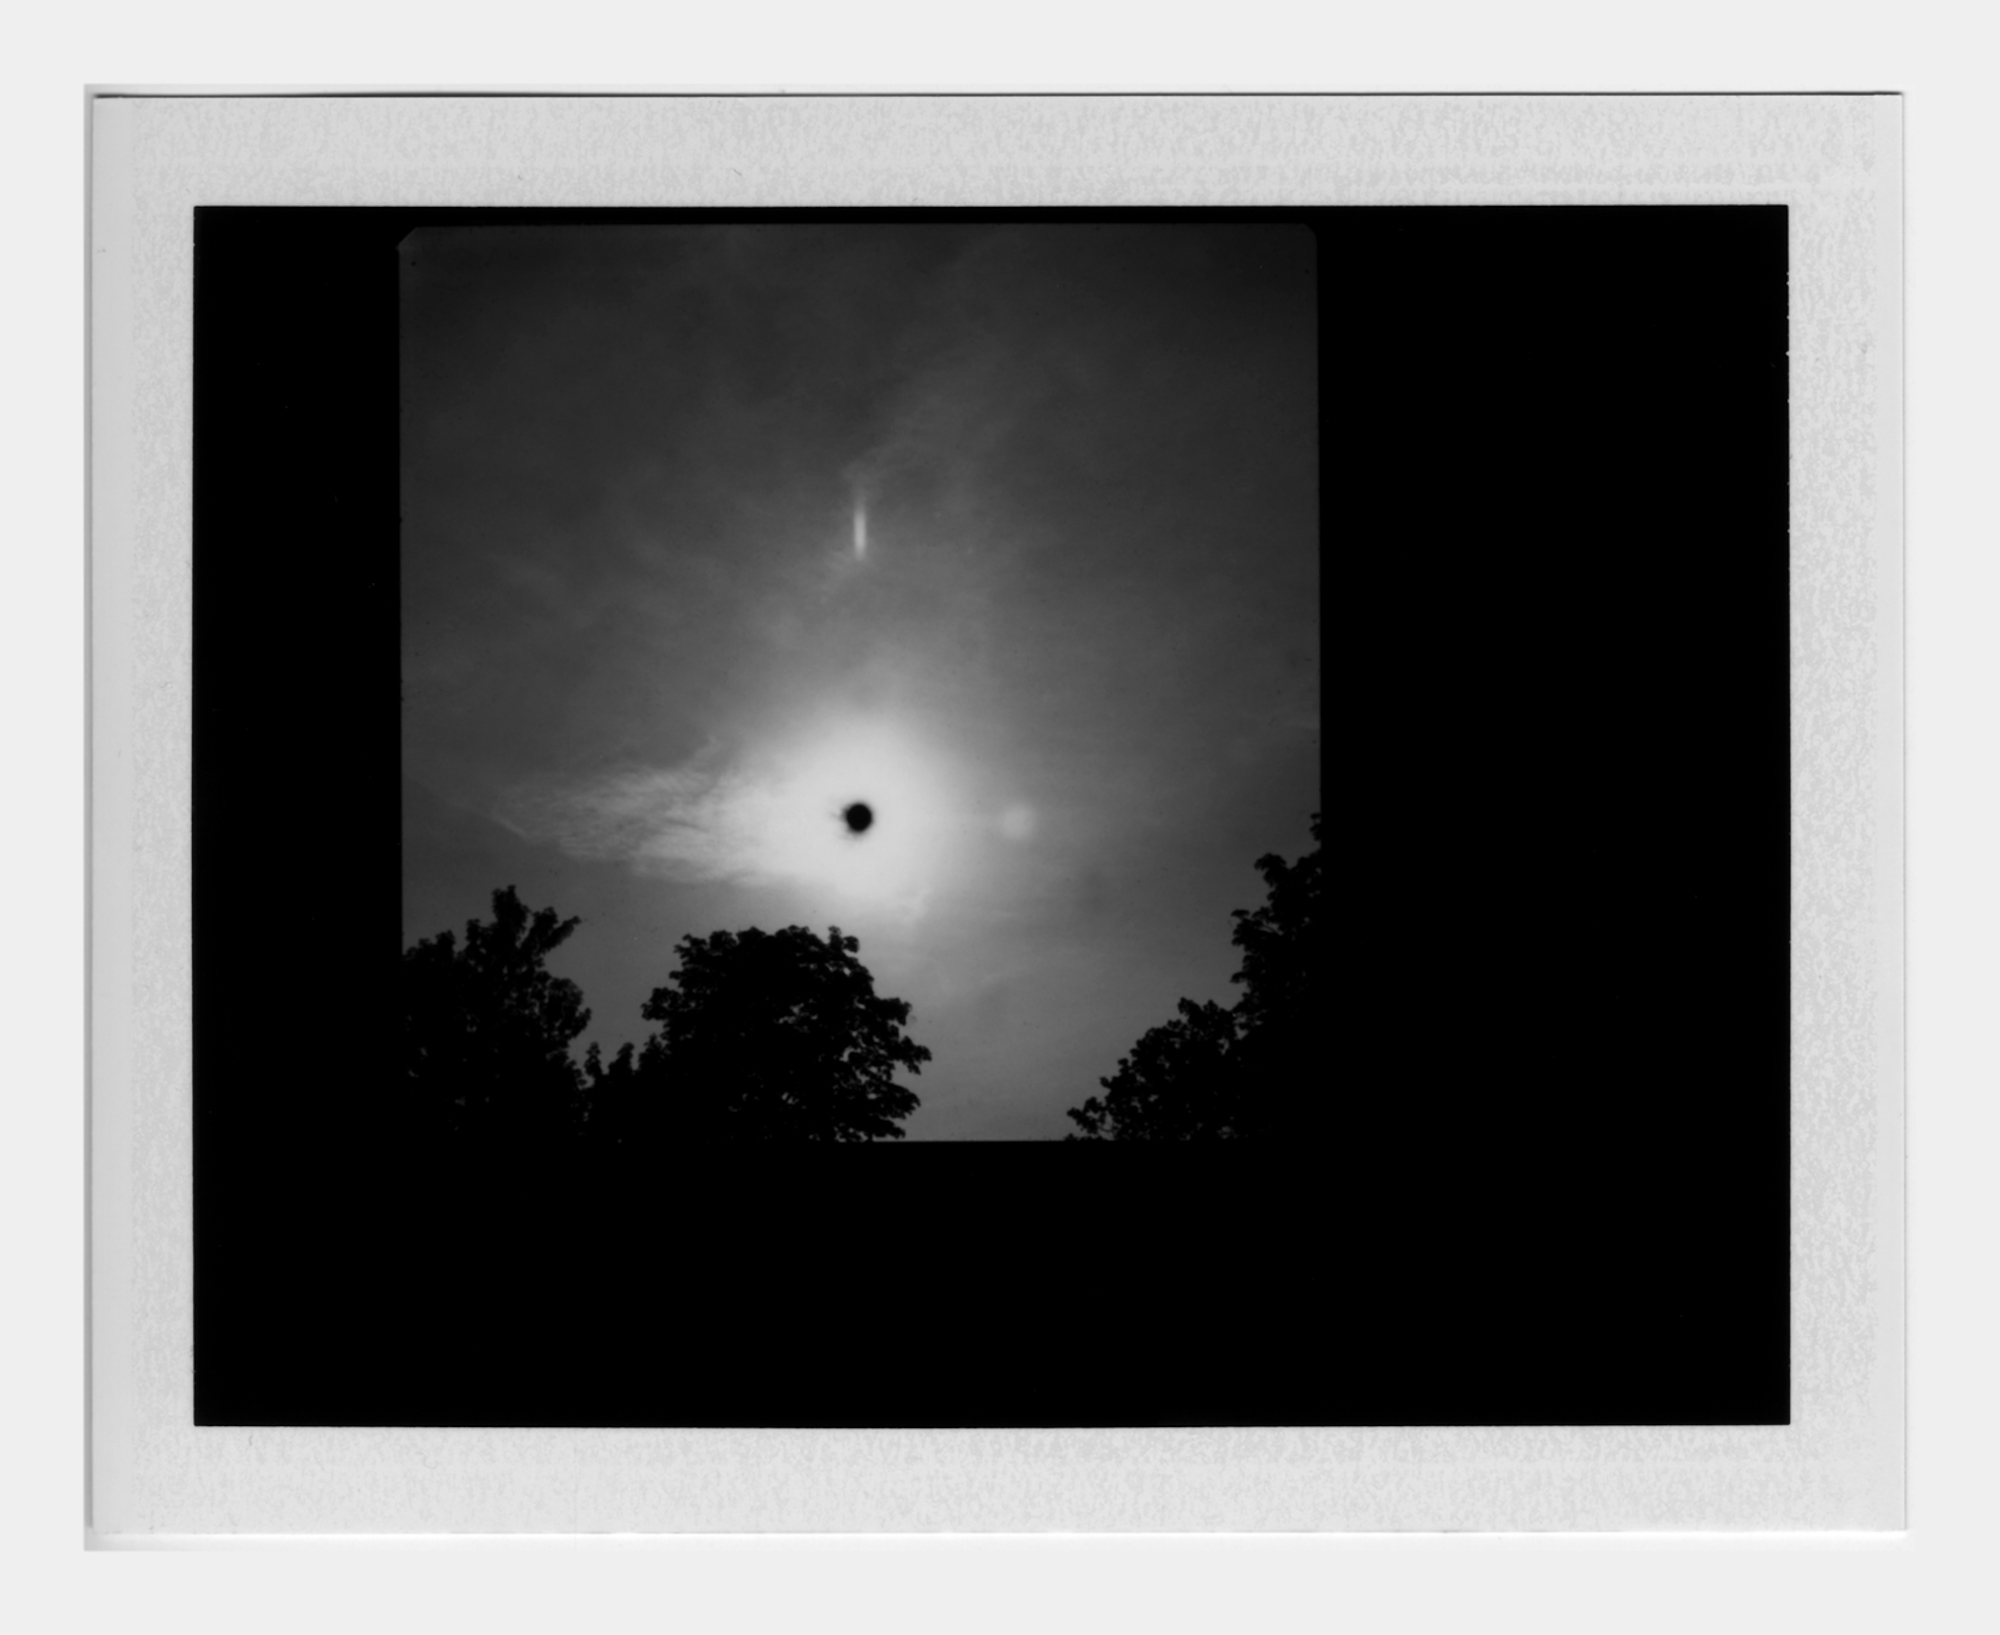  Michael John Whelan  Transit of Venus (2) 2012 Framed polaroid 22 x 24 cm 